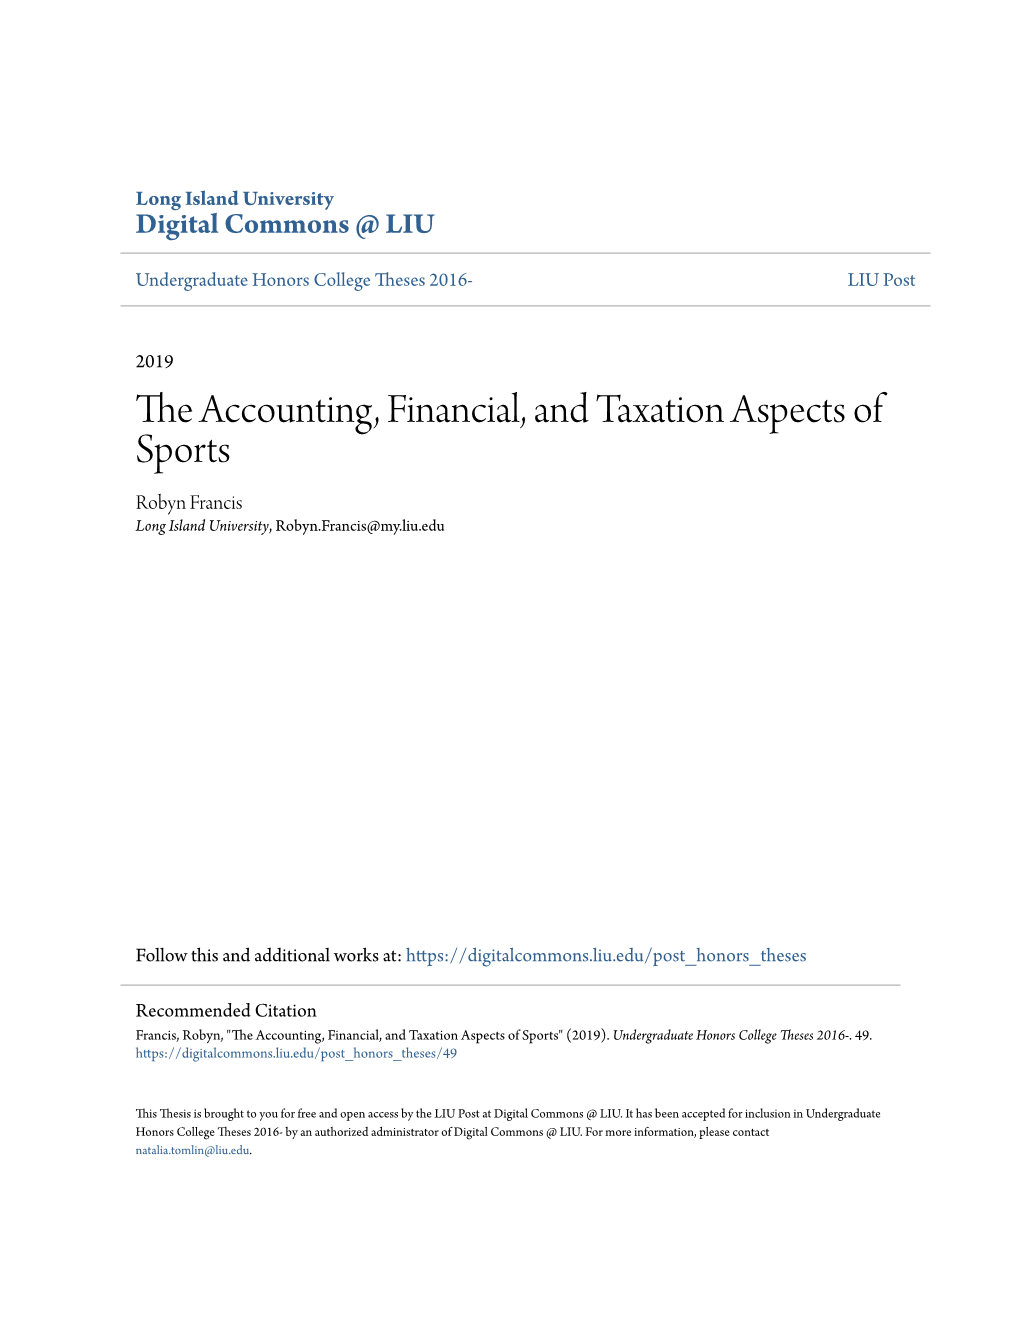 The Accounting, Financial, and Taxation Aspects of Sports Robyn Francis Long Island University, Robyn.Francis@My.Liu.Edu